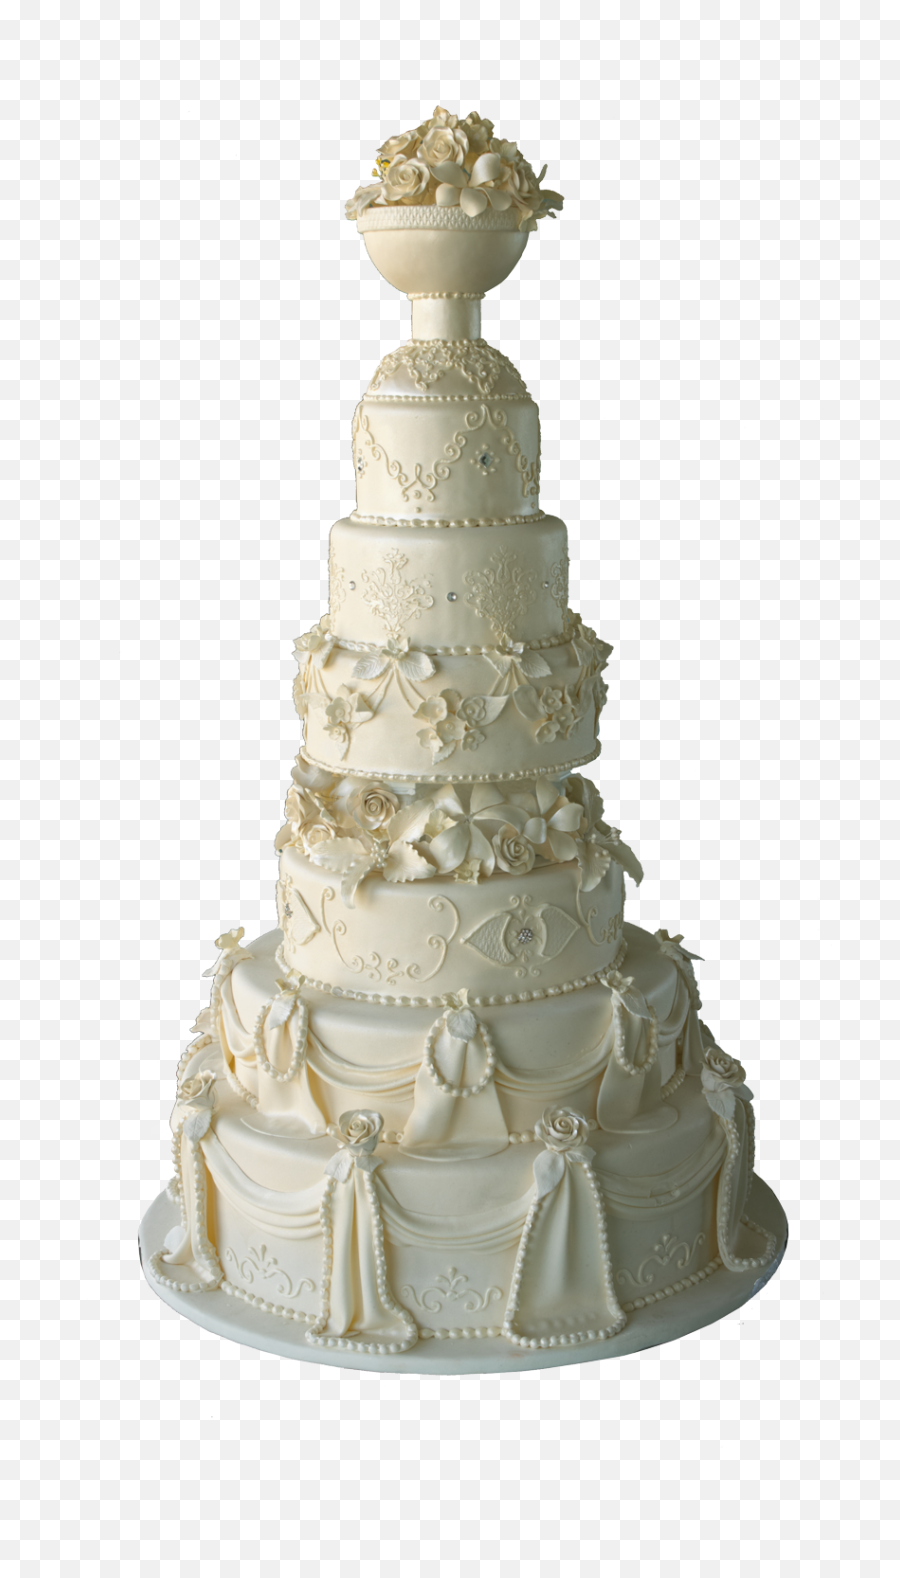 Delicious Cakes Of Addison Wedding Cakes - The Knot Wedding Cake Emoji,Emotion And Firehat